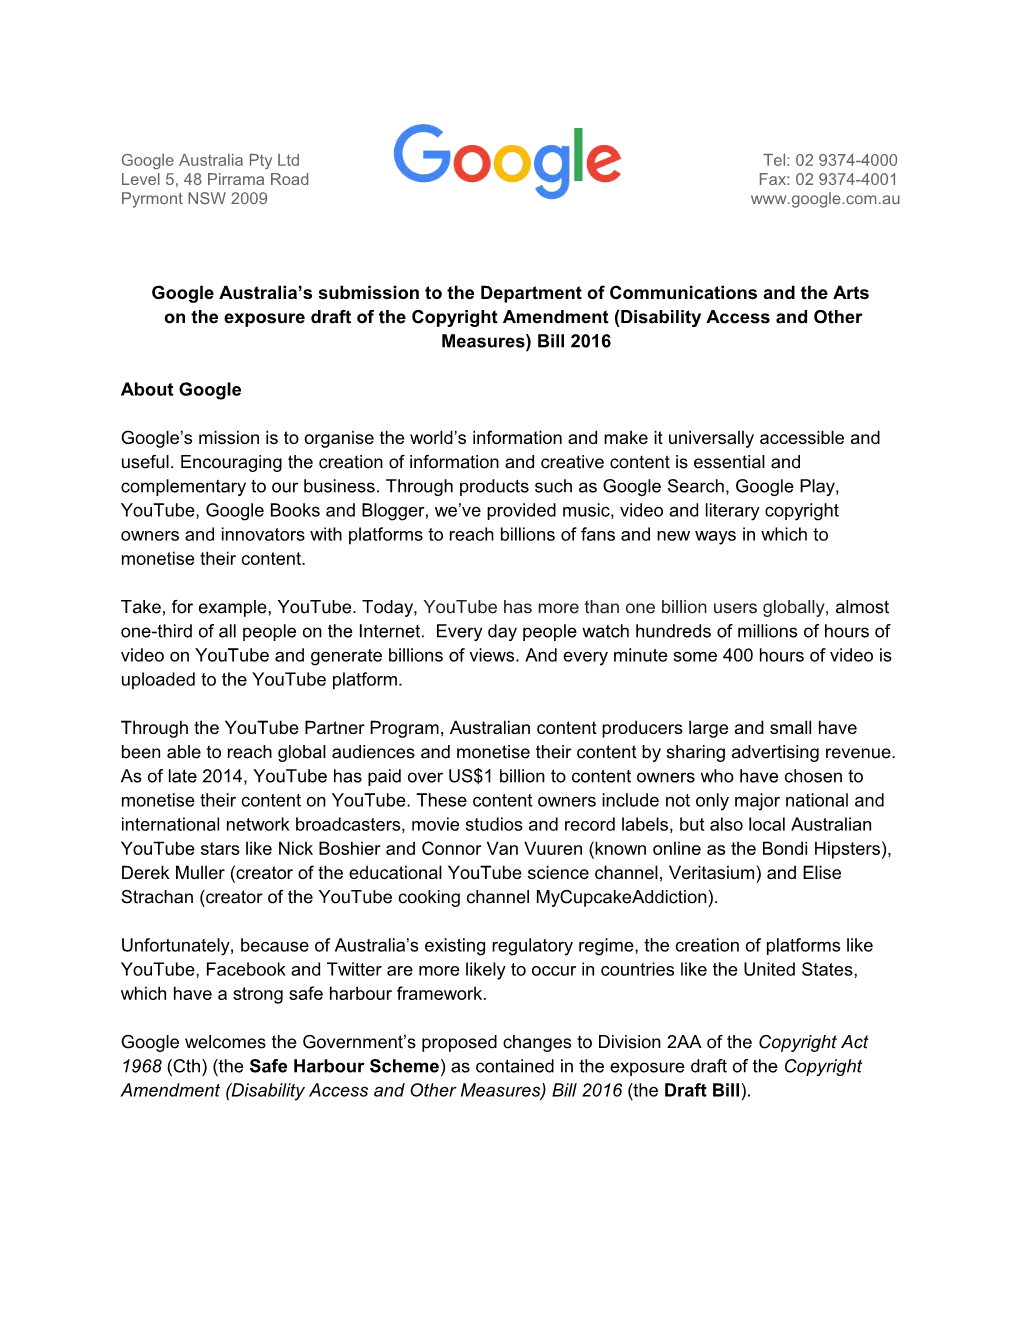 Response to the Proposed Reforms to the Copyright Act 1968 Google Australia